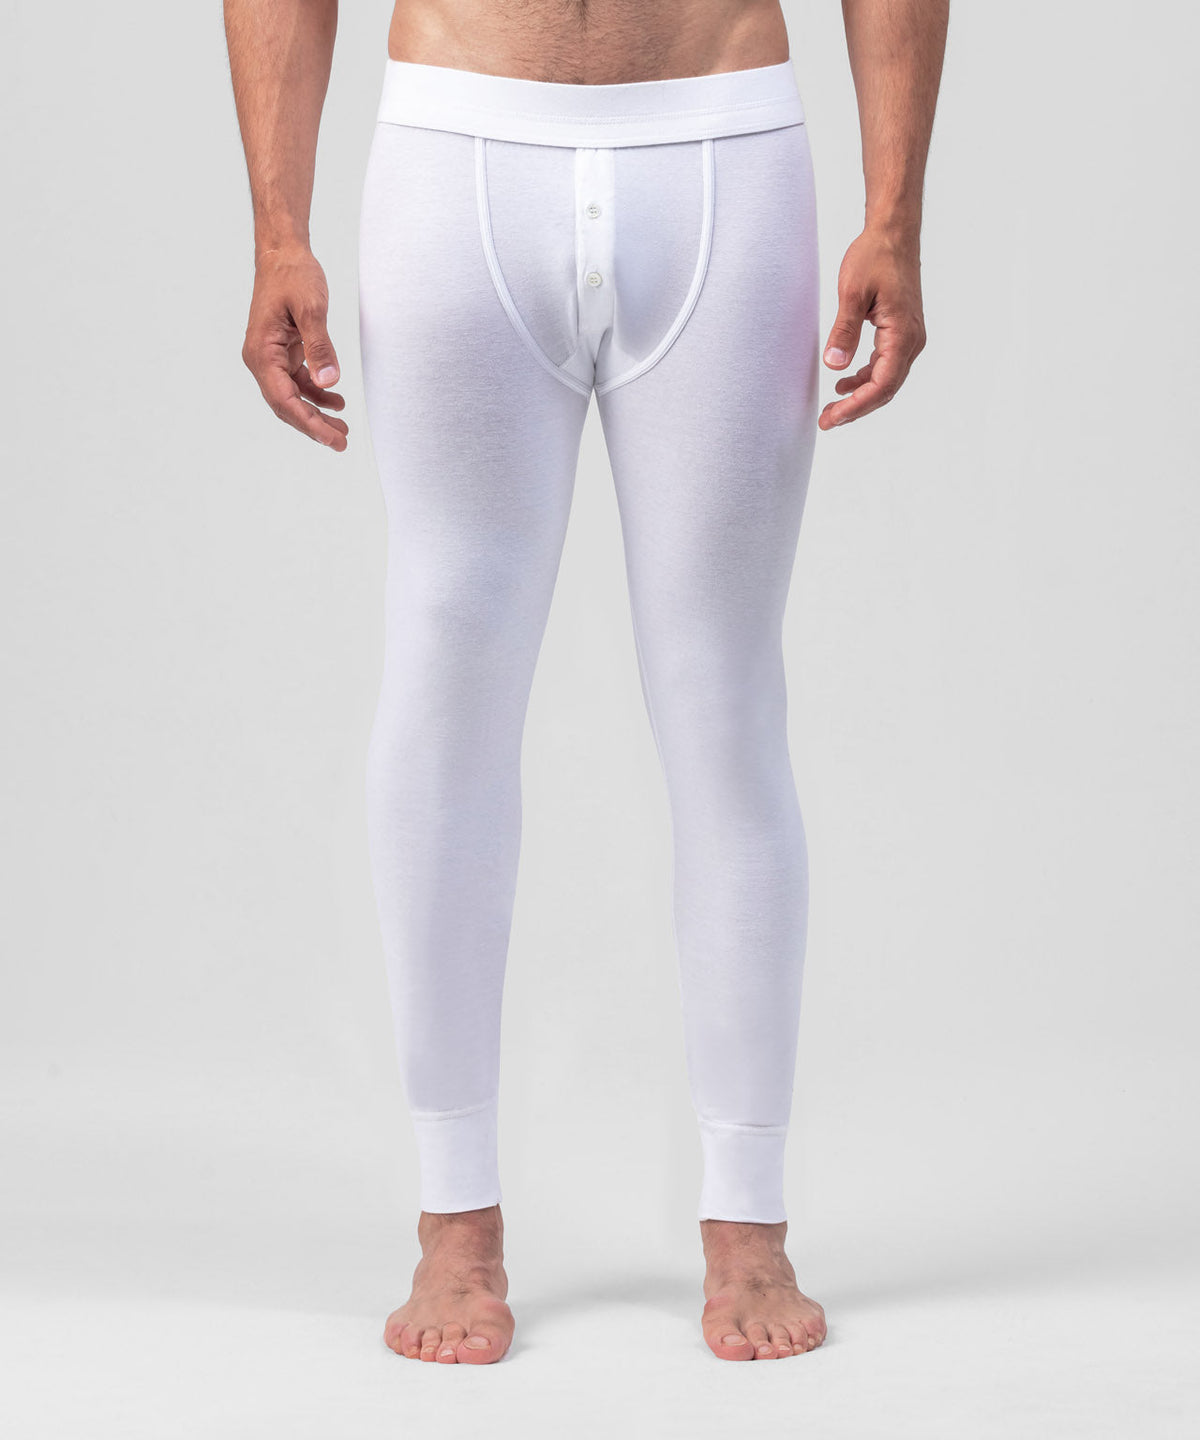 UK Mens Thermal Underwear Long Johns Bottoms Pants Base Layer Work